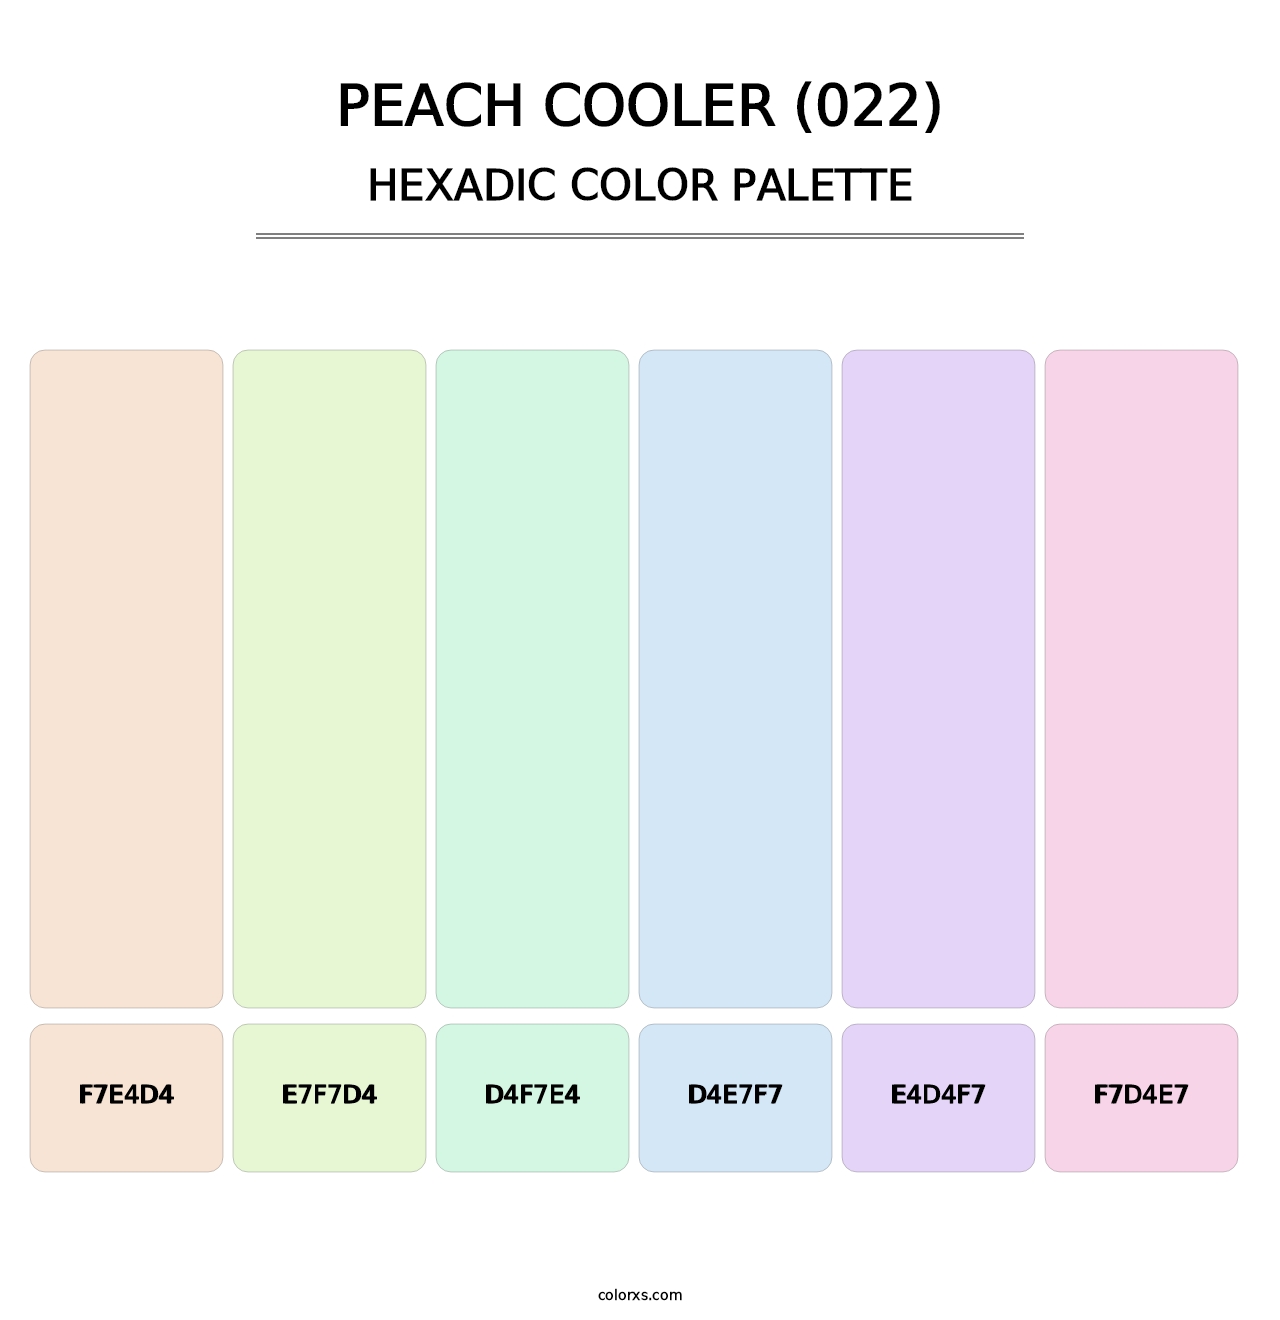 Peach Cooler (022) - Hexadic Color Palette